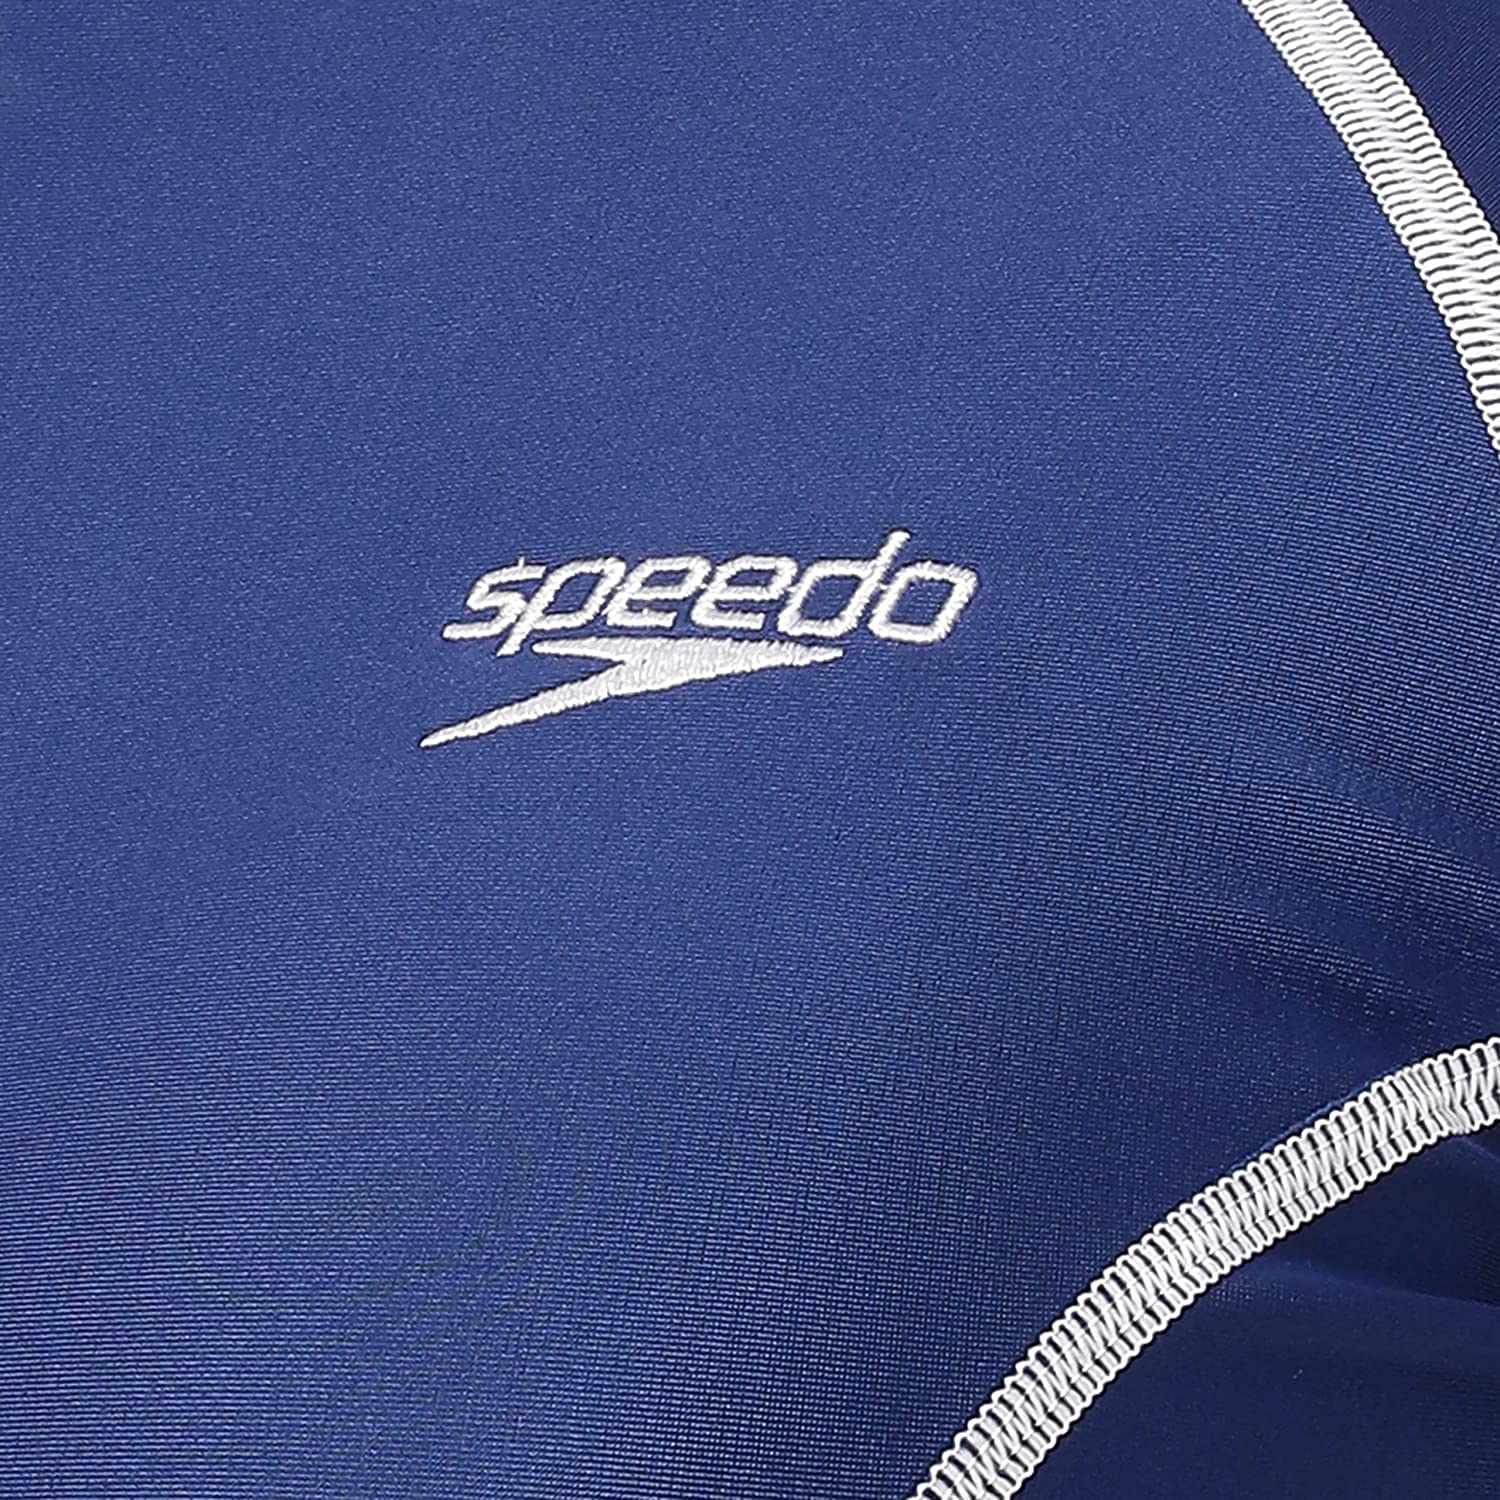 Speedo Female Solid Ls Rashtop - Best Price online Prokicksports.com